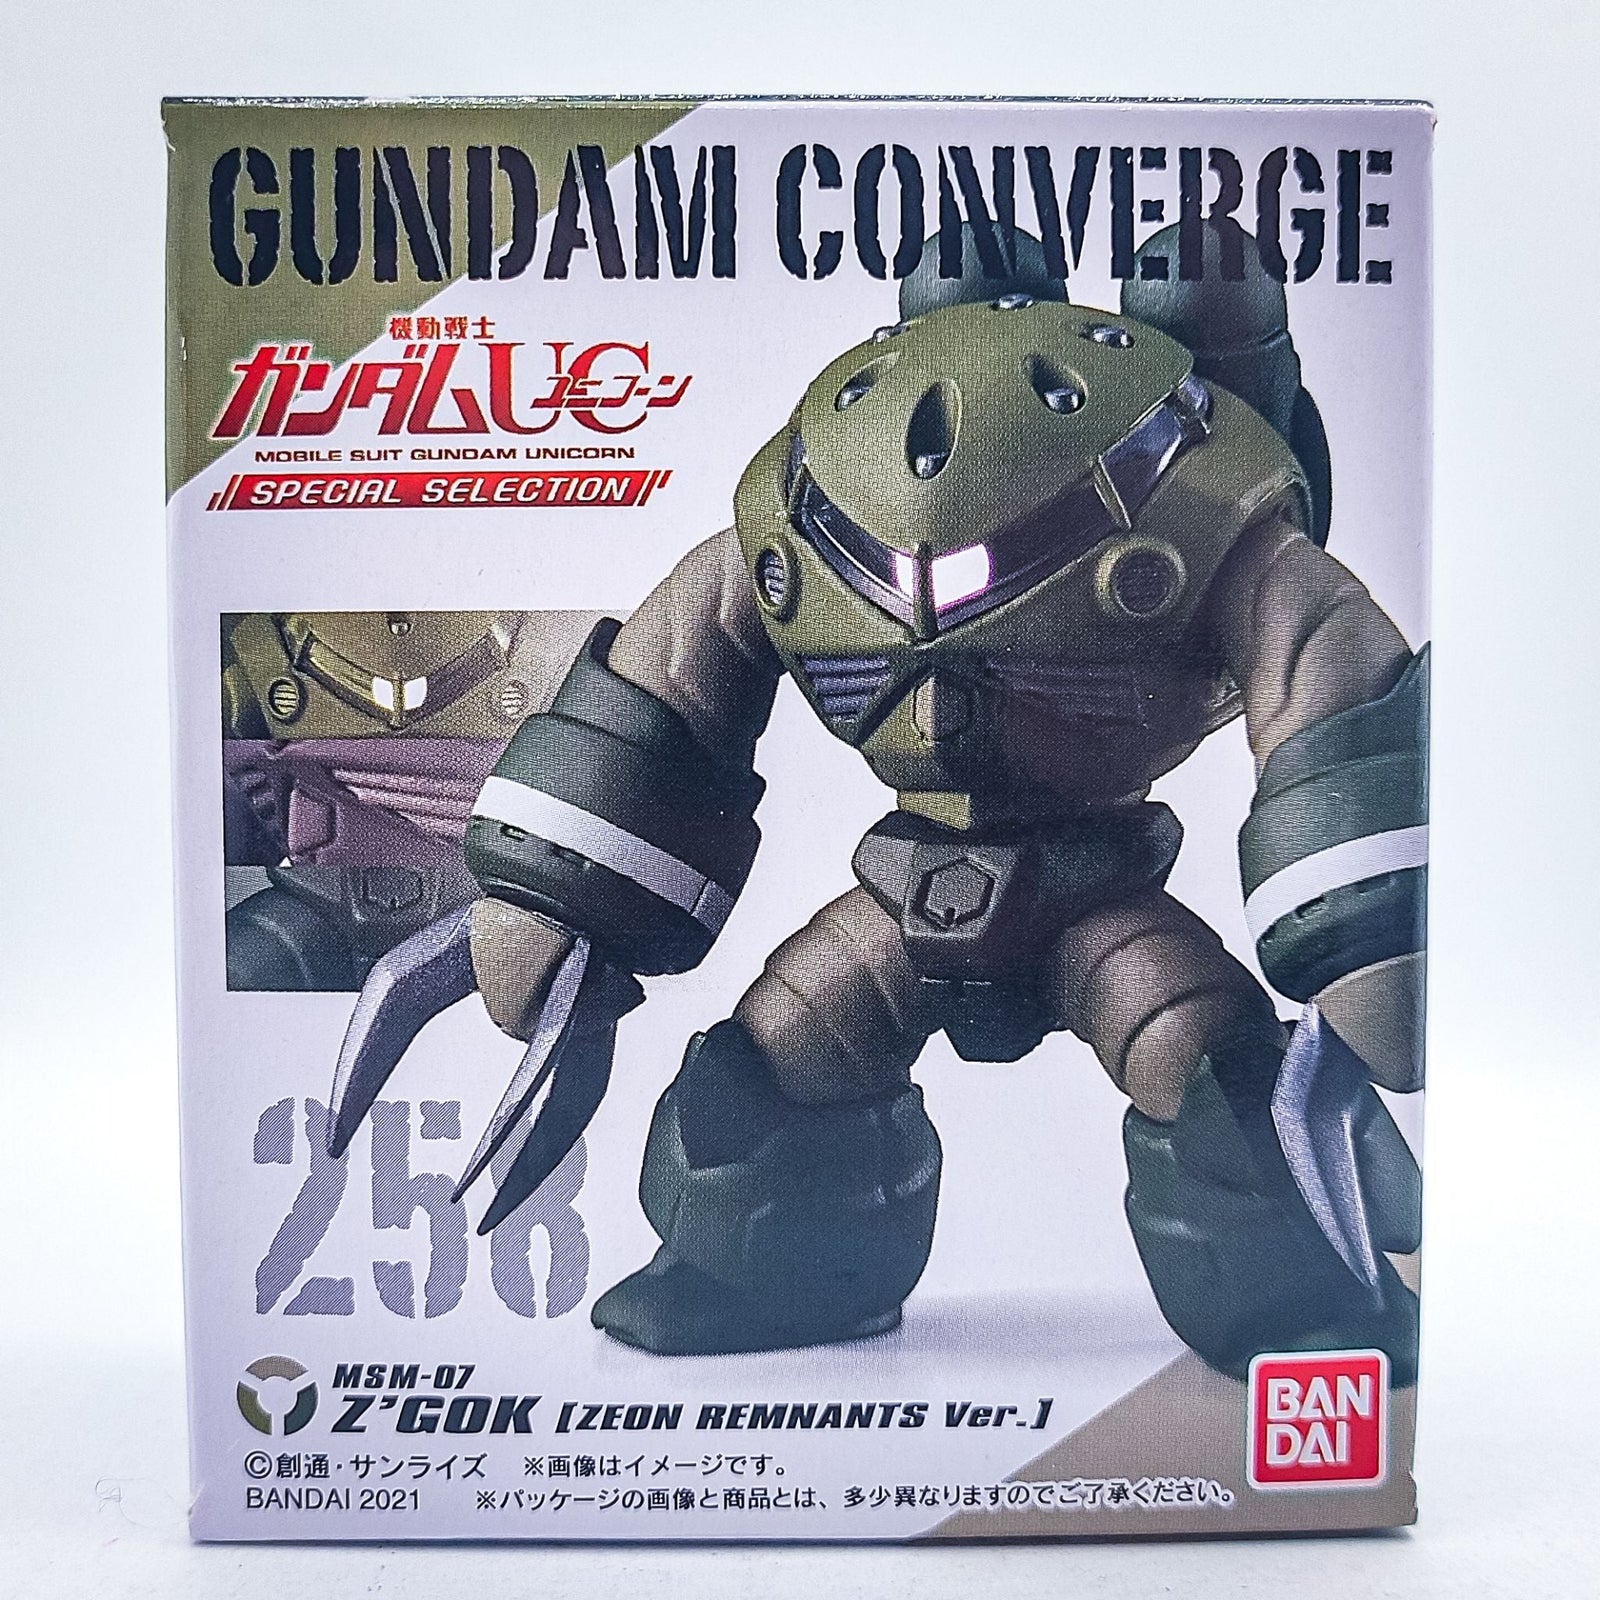 Gundam Converge #258 Z'gok Zeon Remnants Version by Bandai - 1